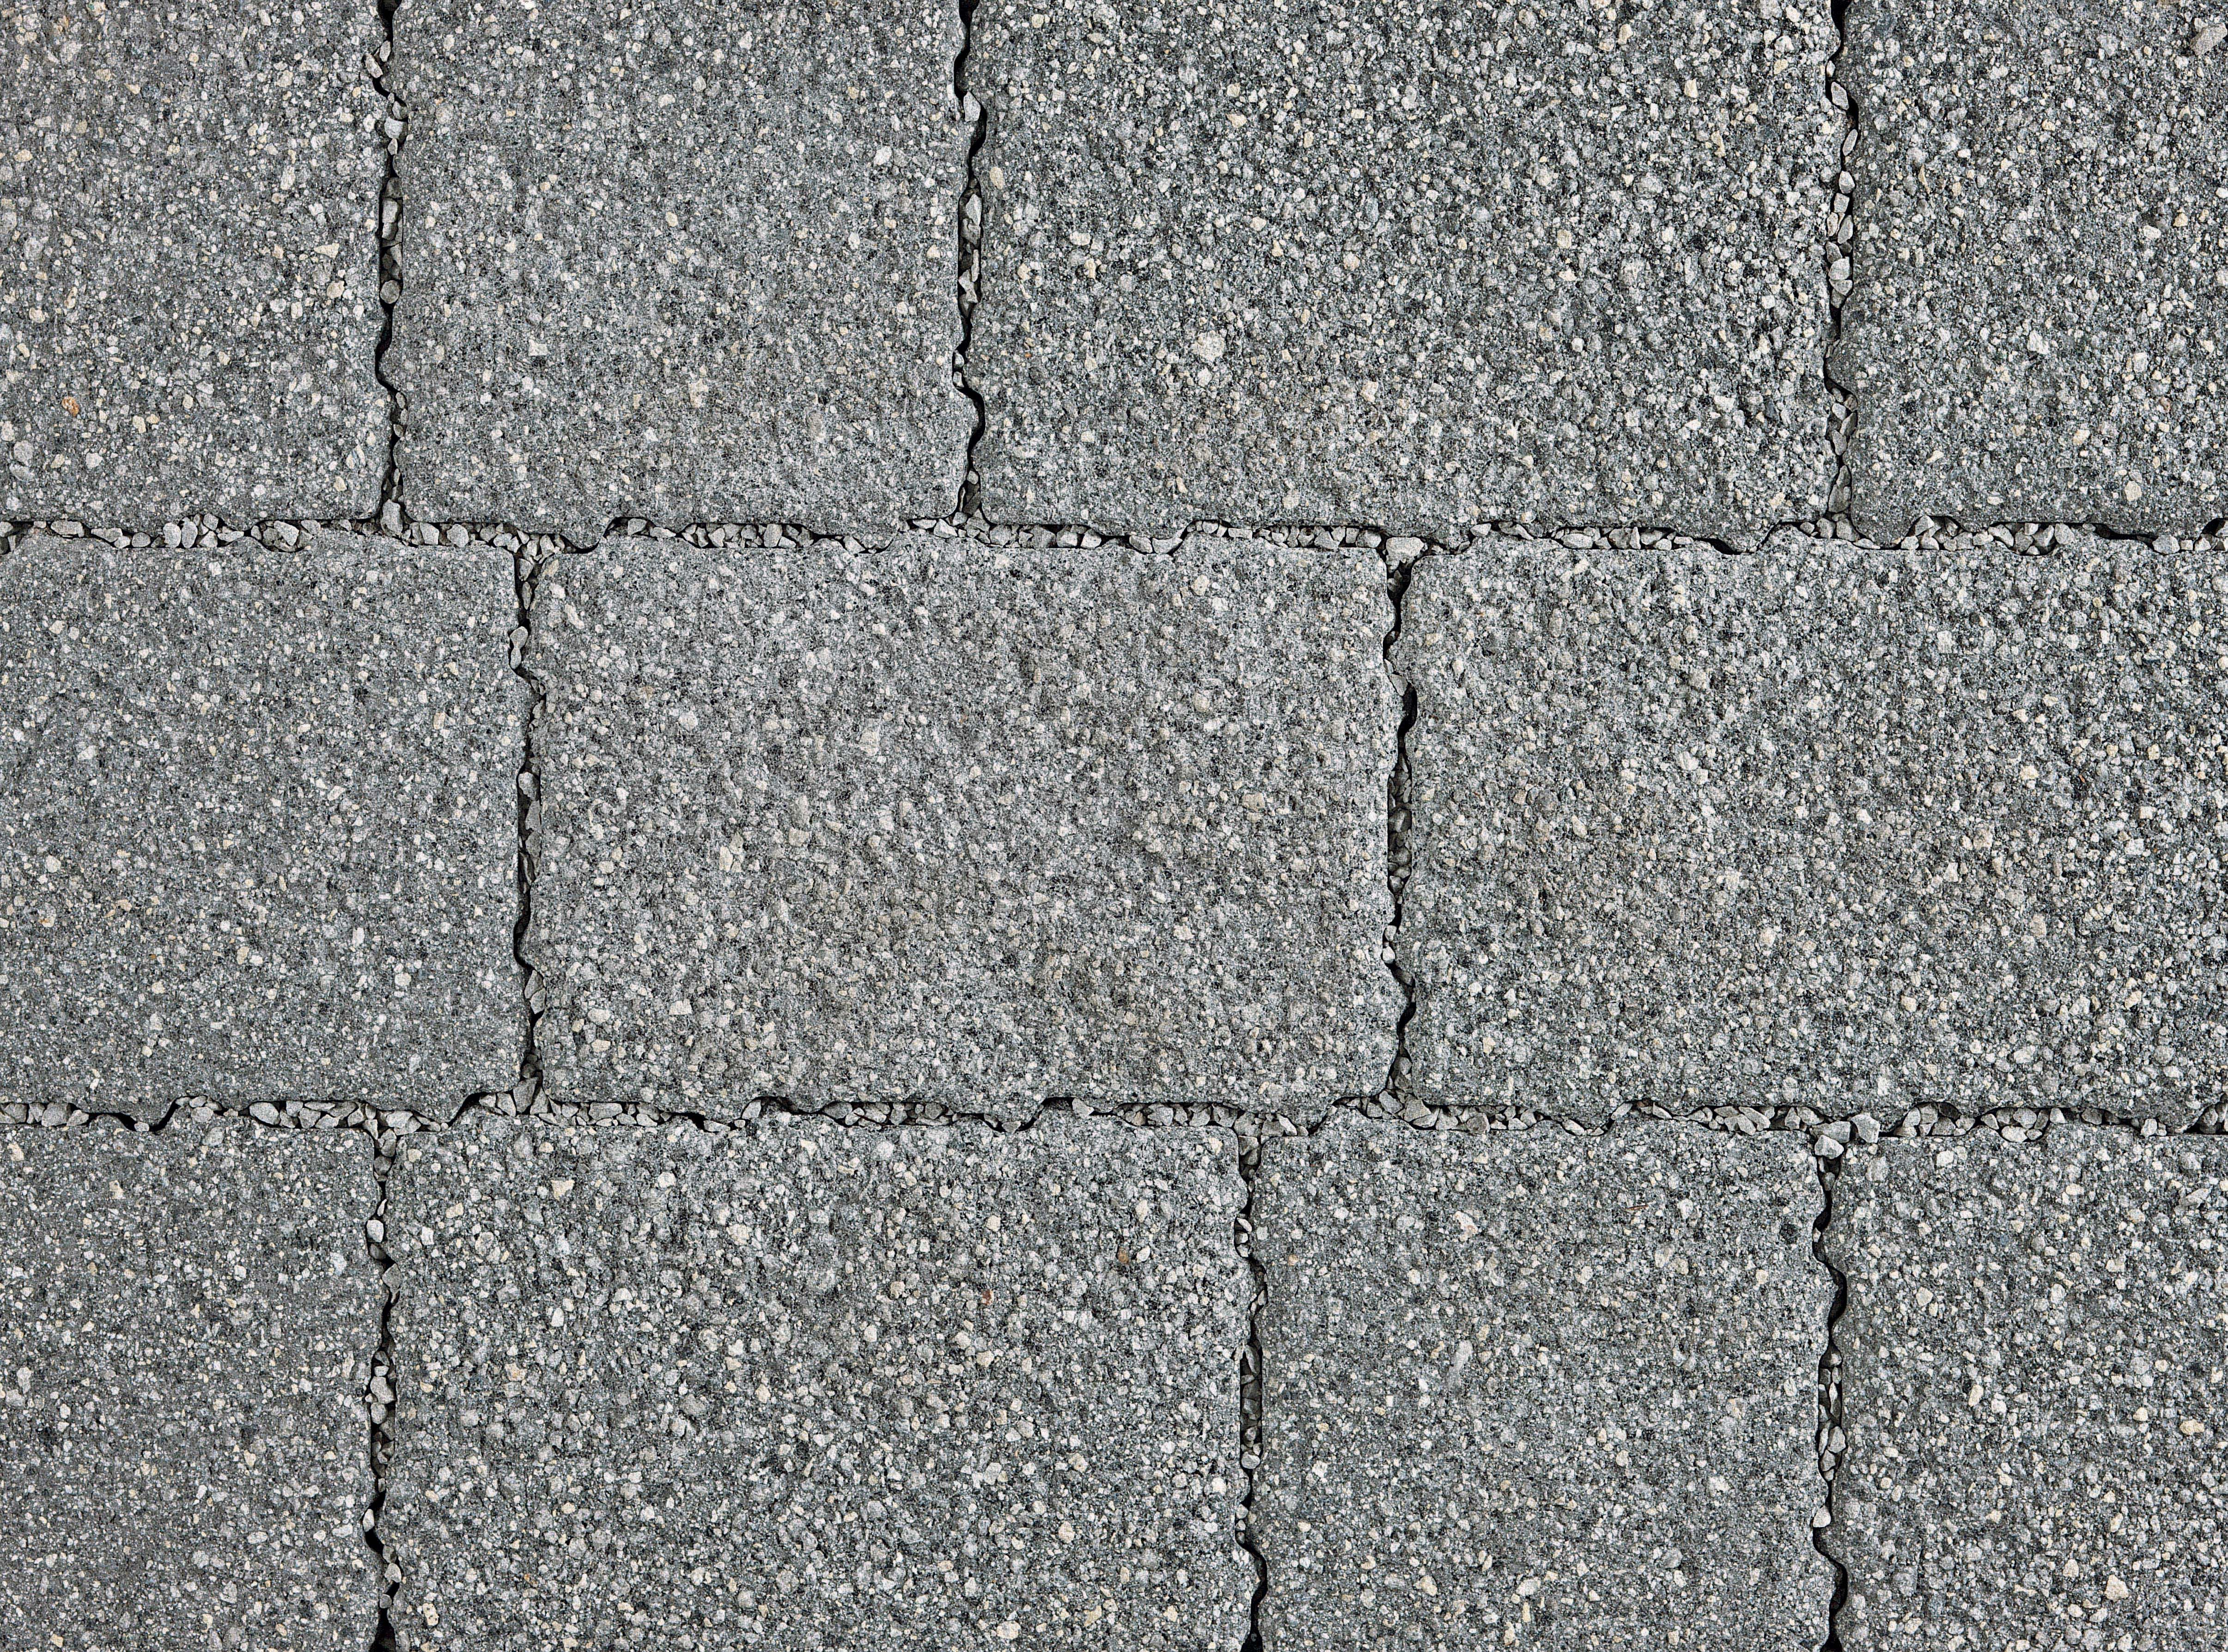 Marshalls Argent Priora Mixed Size Dark Silver Driveway Textured Block Paving - Sample